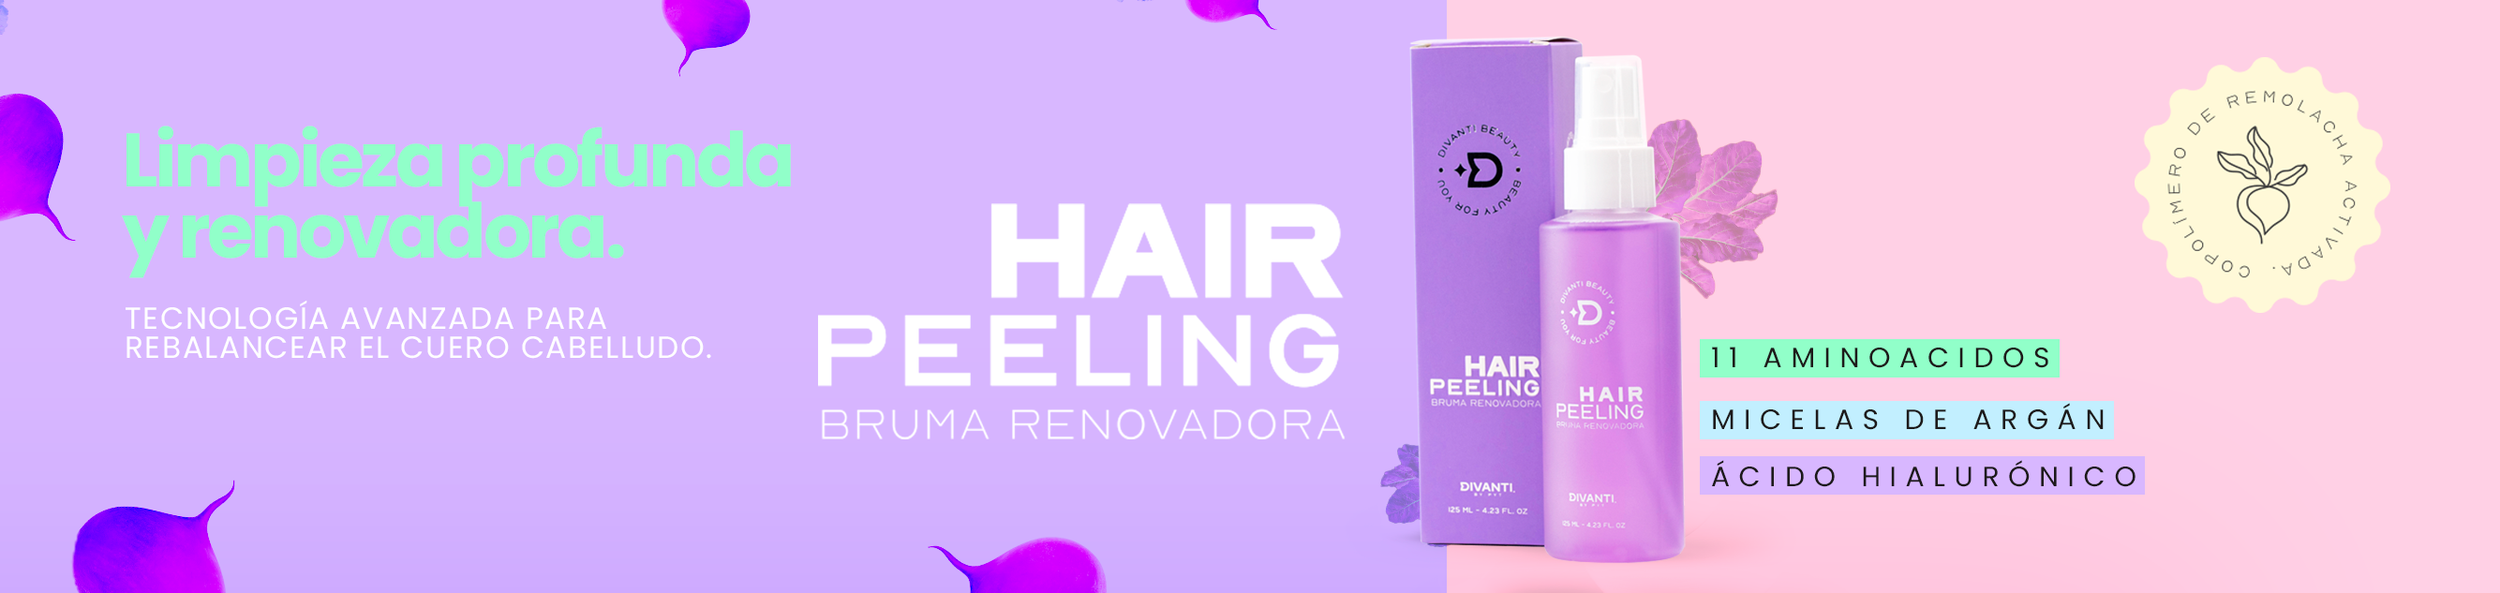 Banner Hair Peeling PYT